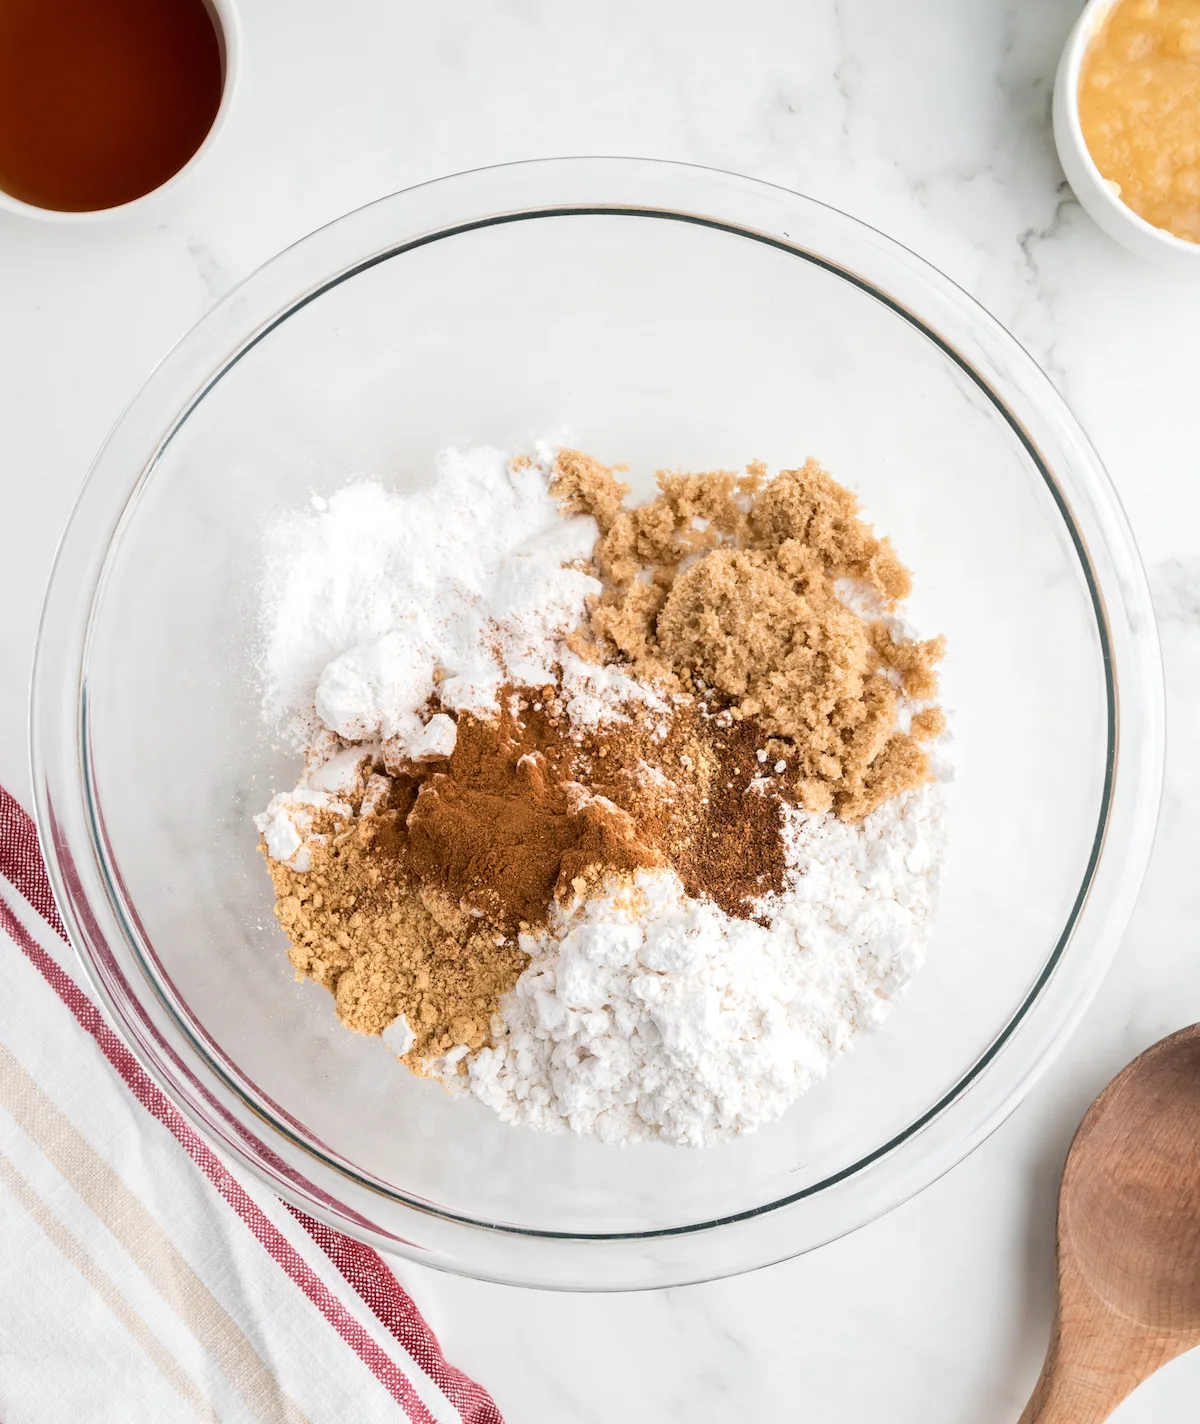 flour, brown sugar, baking powder, baking soda, ginger, cinnamon, cloves, nutmeg, and salt together in a clear glass bowl